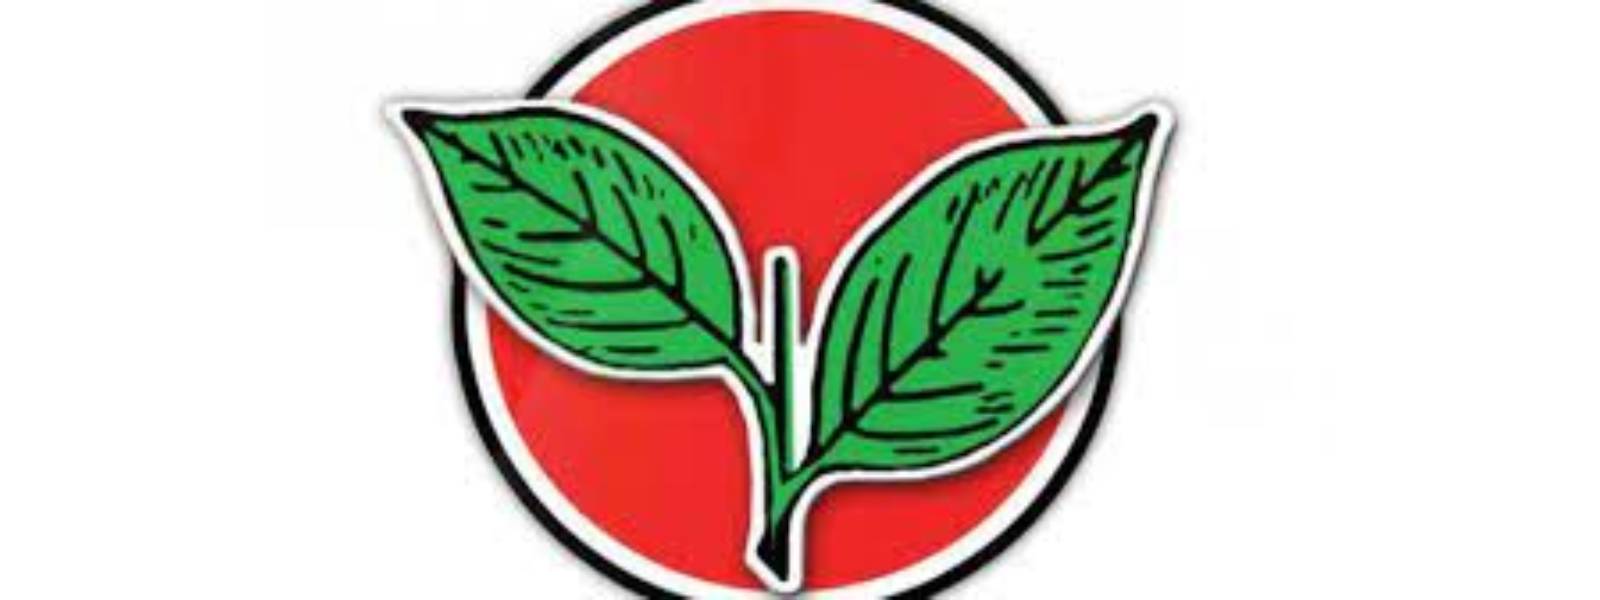 BJP-backed AIADMK pledges to create new "Eelam"